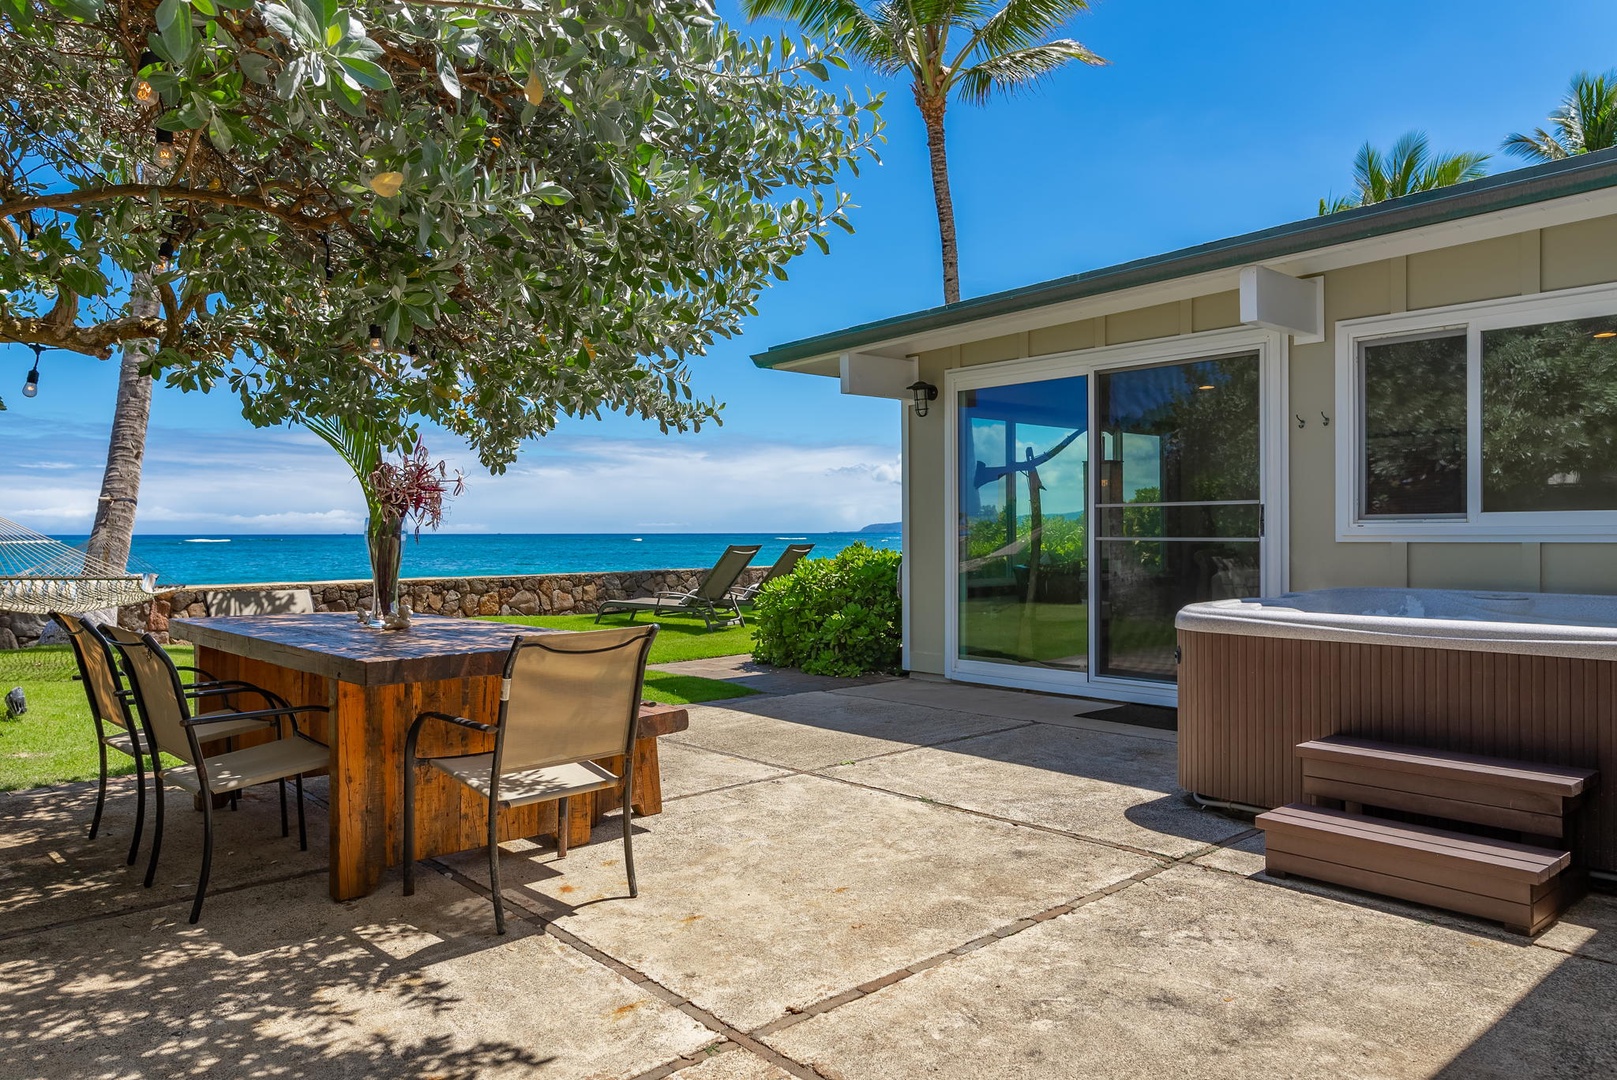 Waialua Vacation Rentals, Hale Oka Nunu - Enjoy the pleasure of being oceanfront anywhere in the backyard